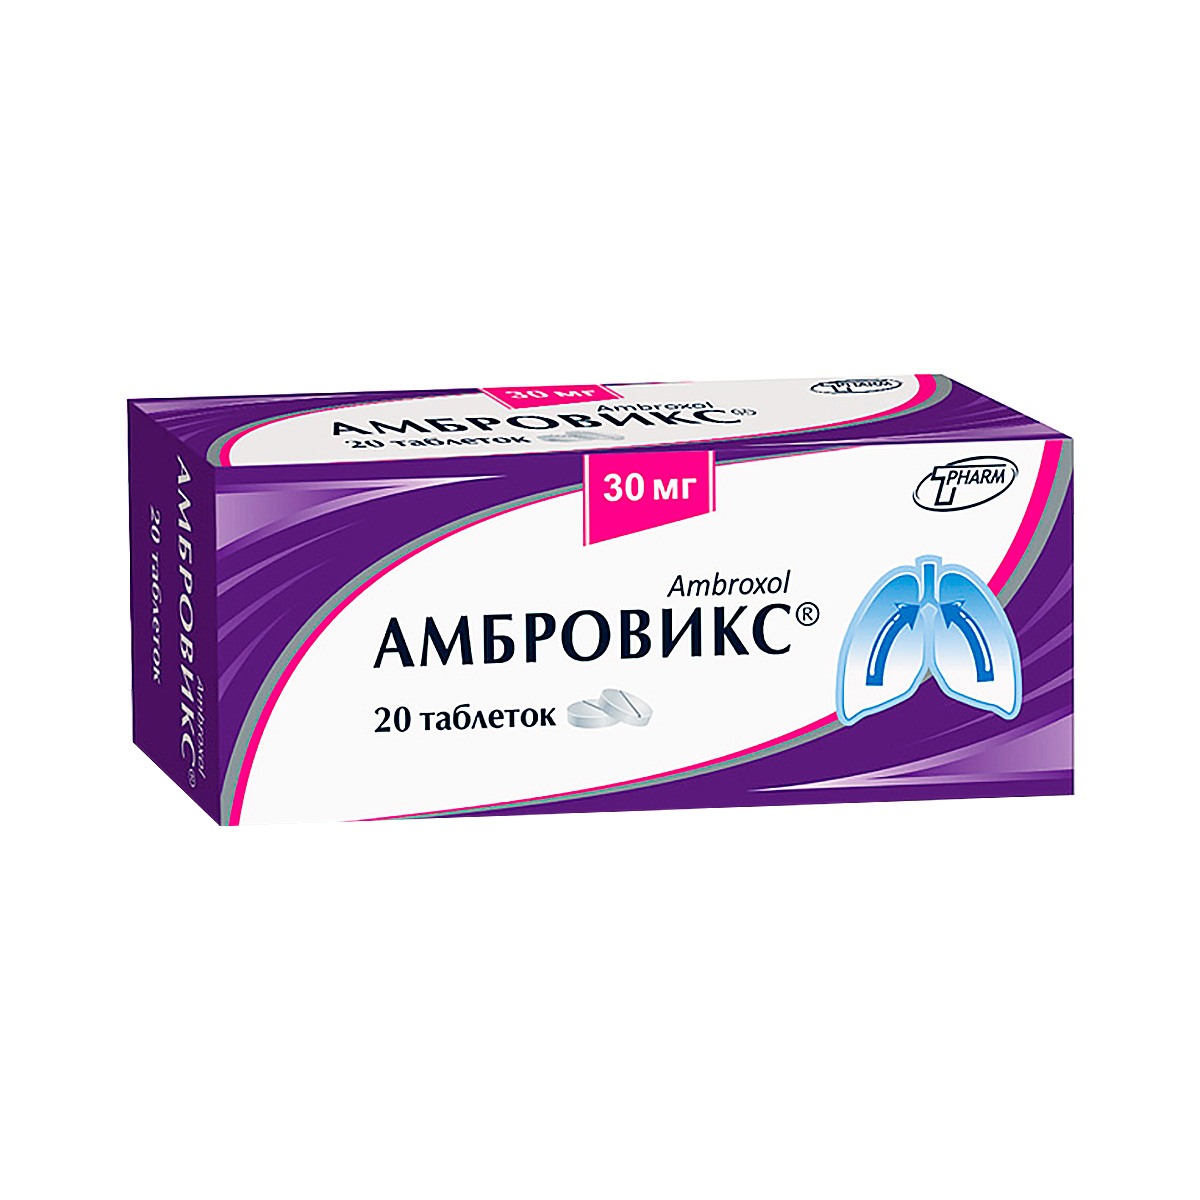 Амбровикс 30 мг таблетки 20 шт